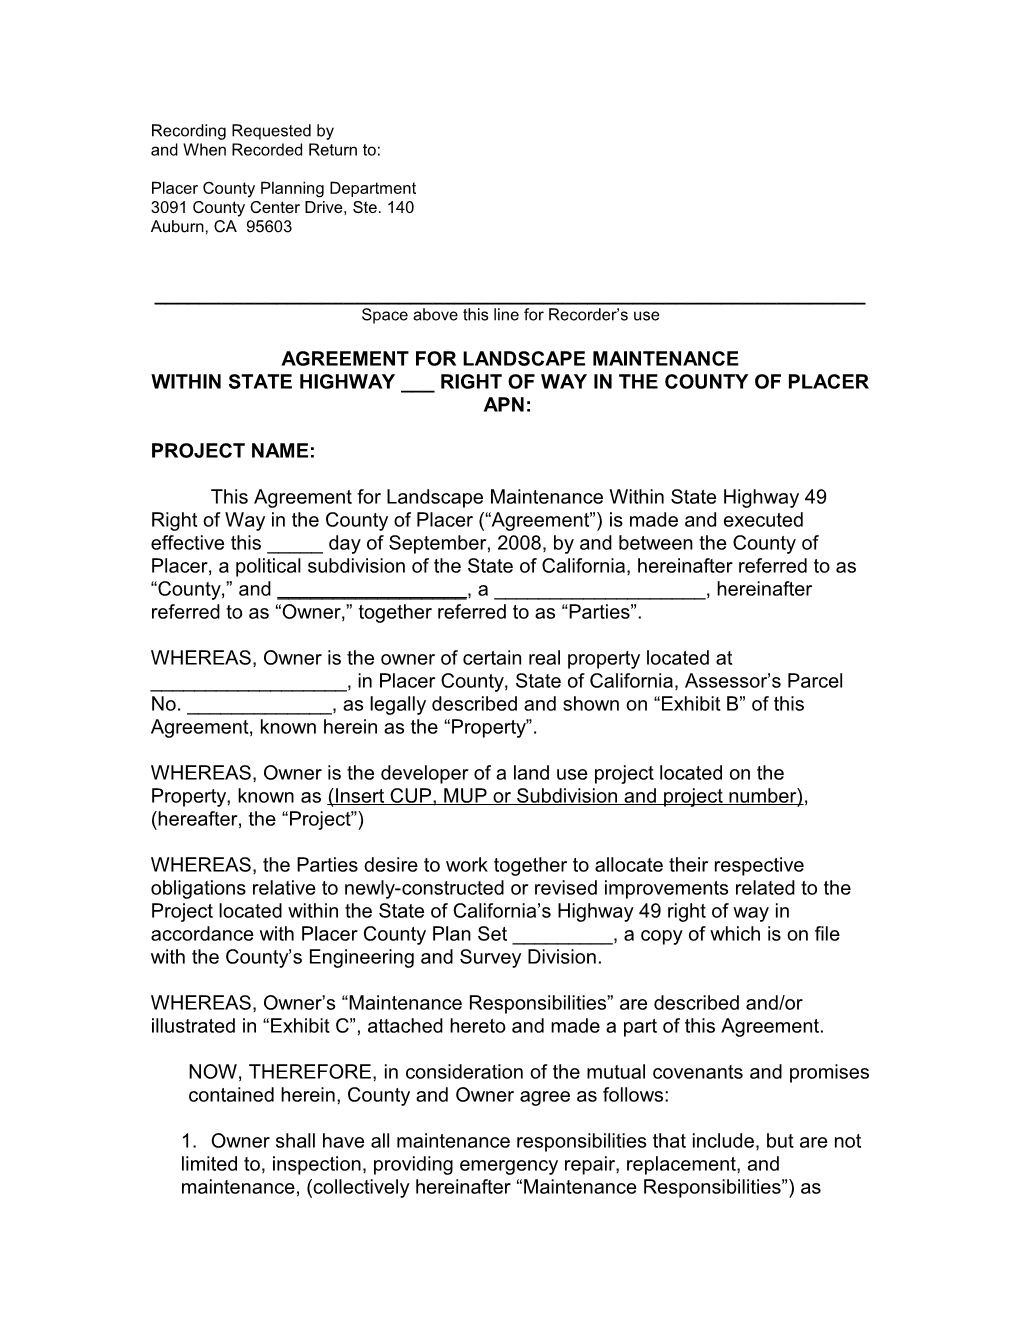 Agreement for Landscape Maintenance